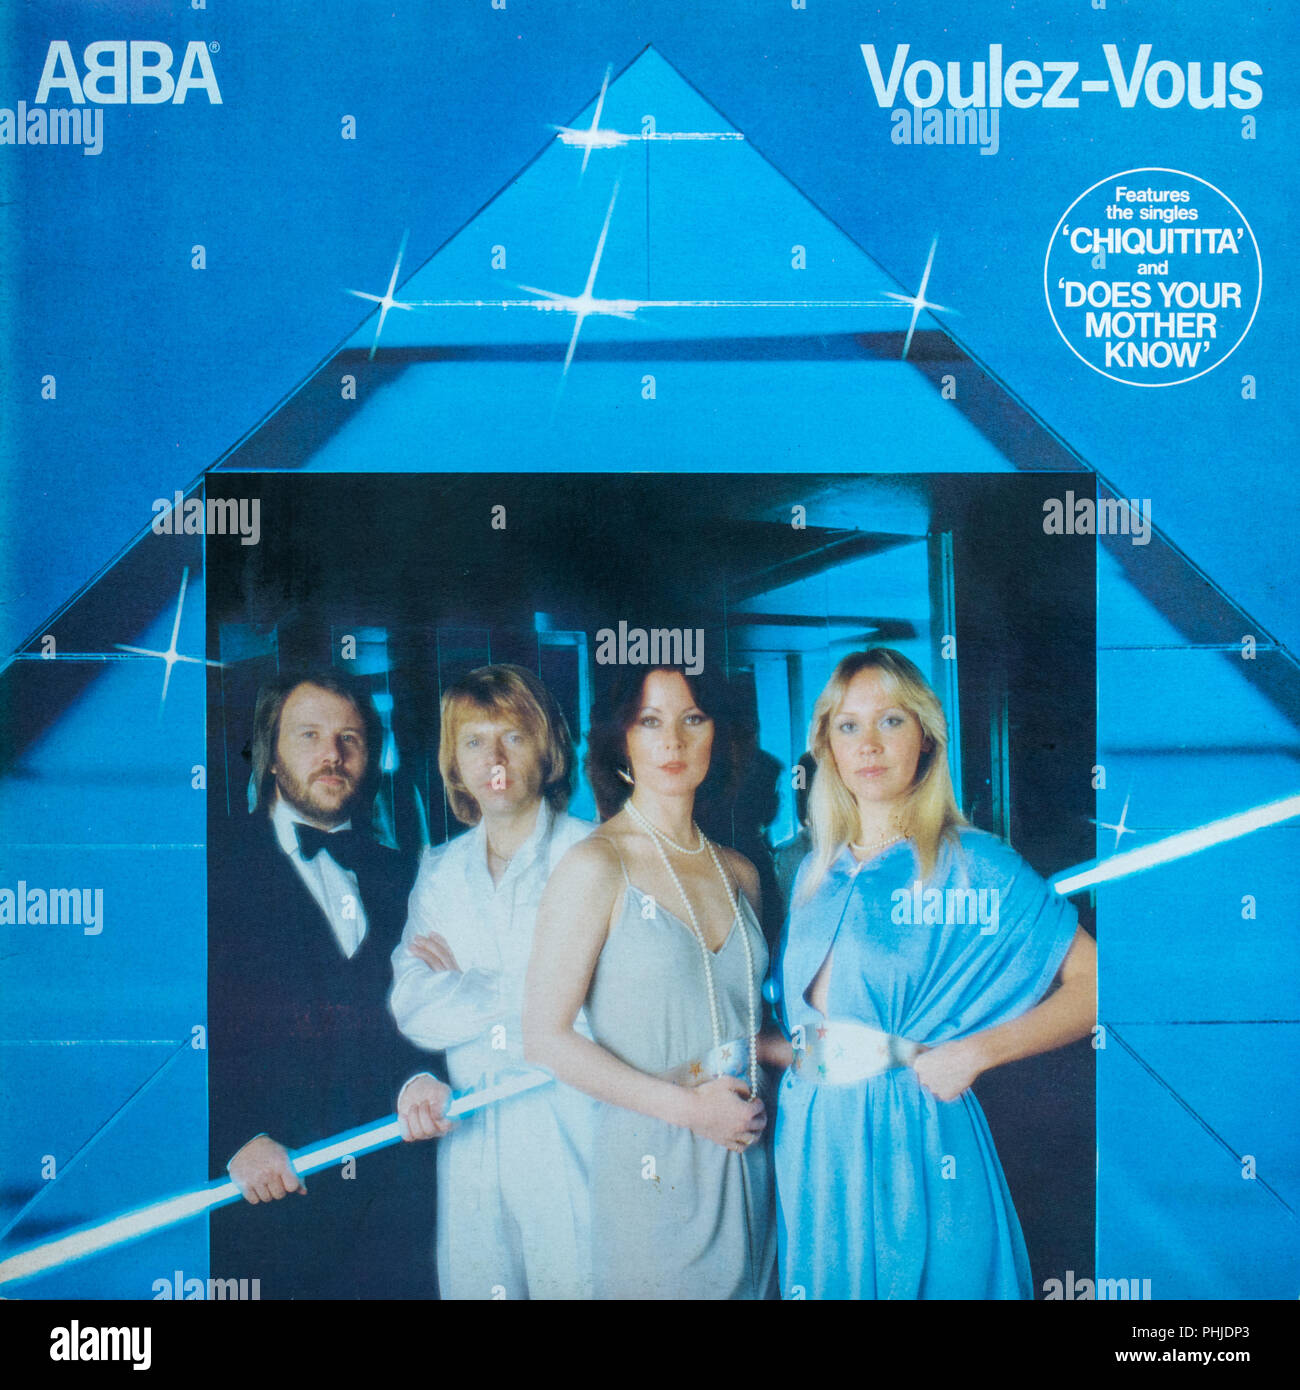 Abba Voulez Vous Album Cover Stockfoto